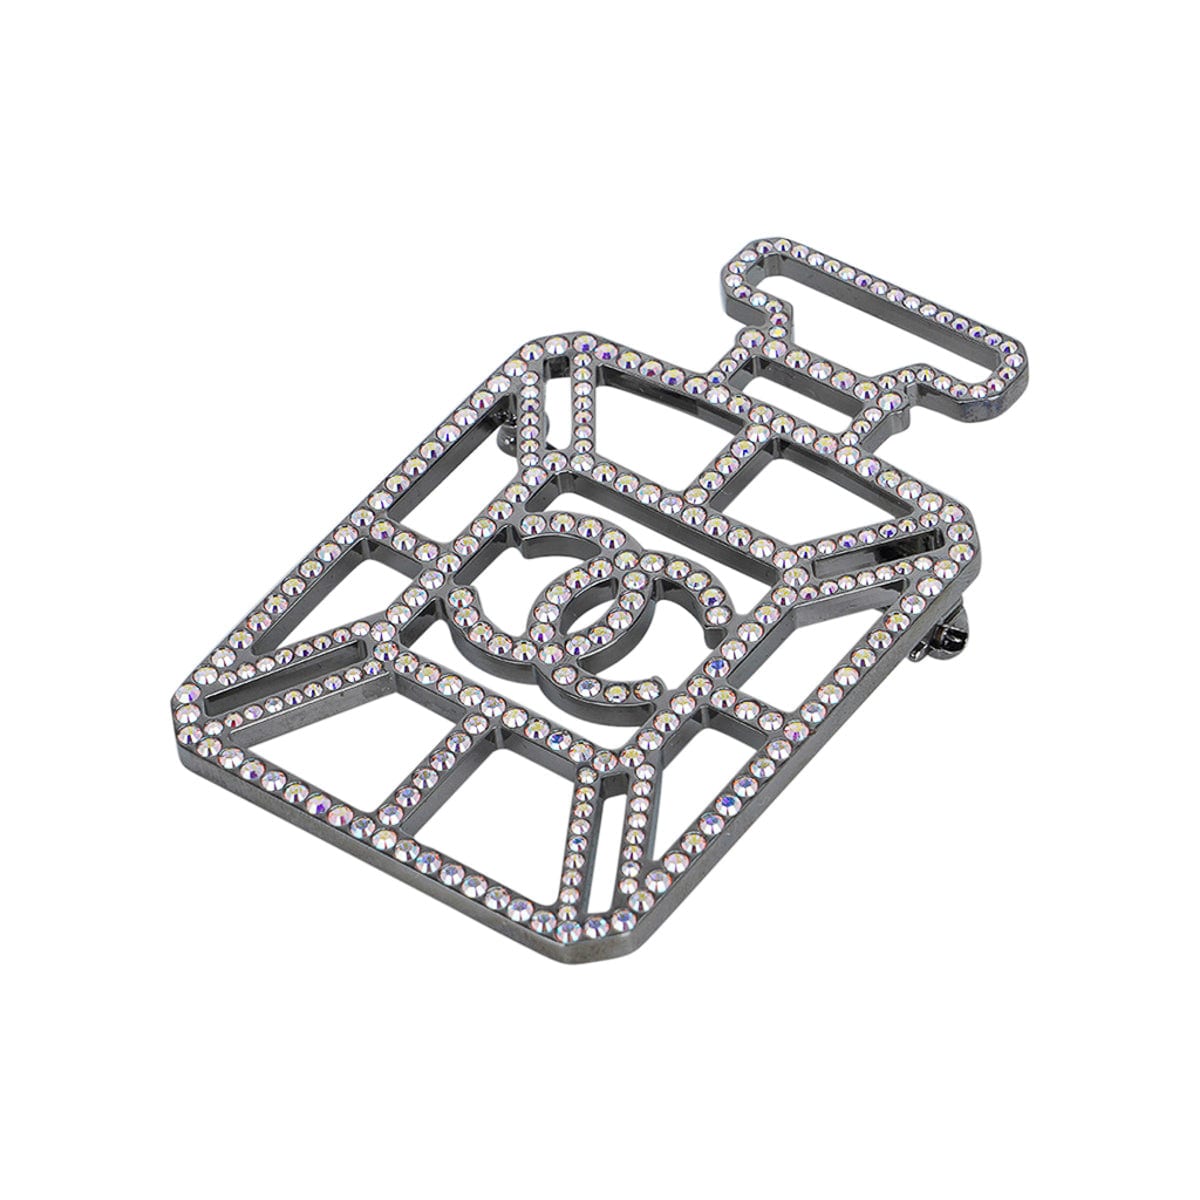 Chanel #5 Perfume Bottle Brooch Iridescent Crystal CC Logo